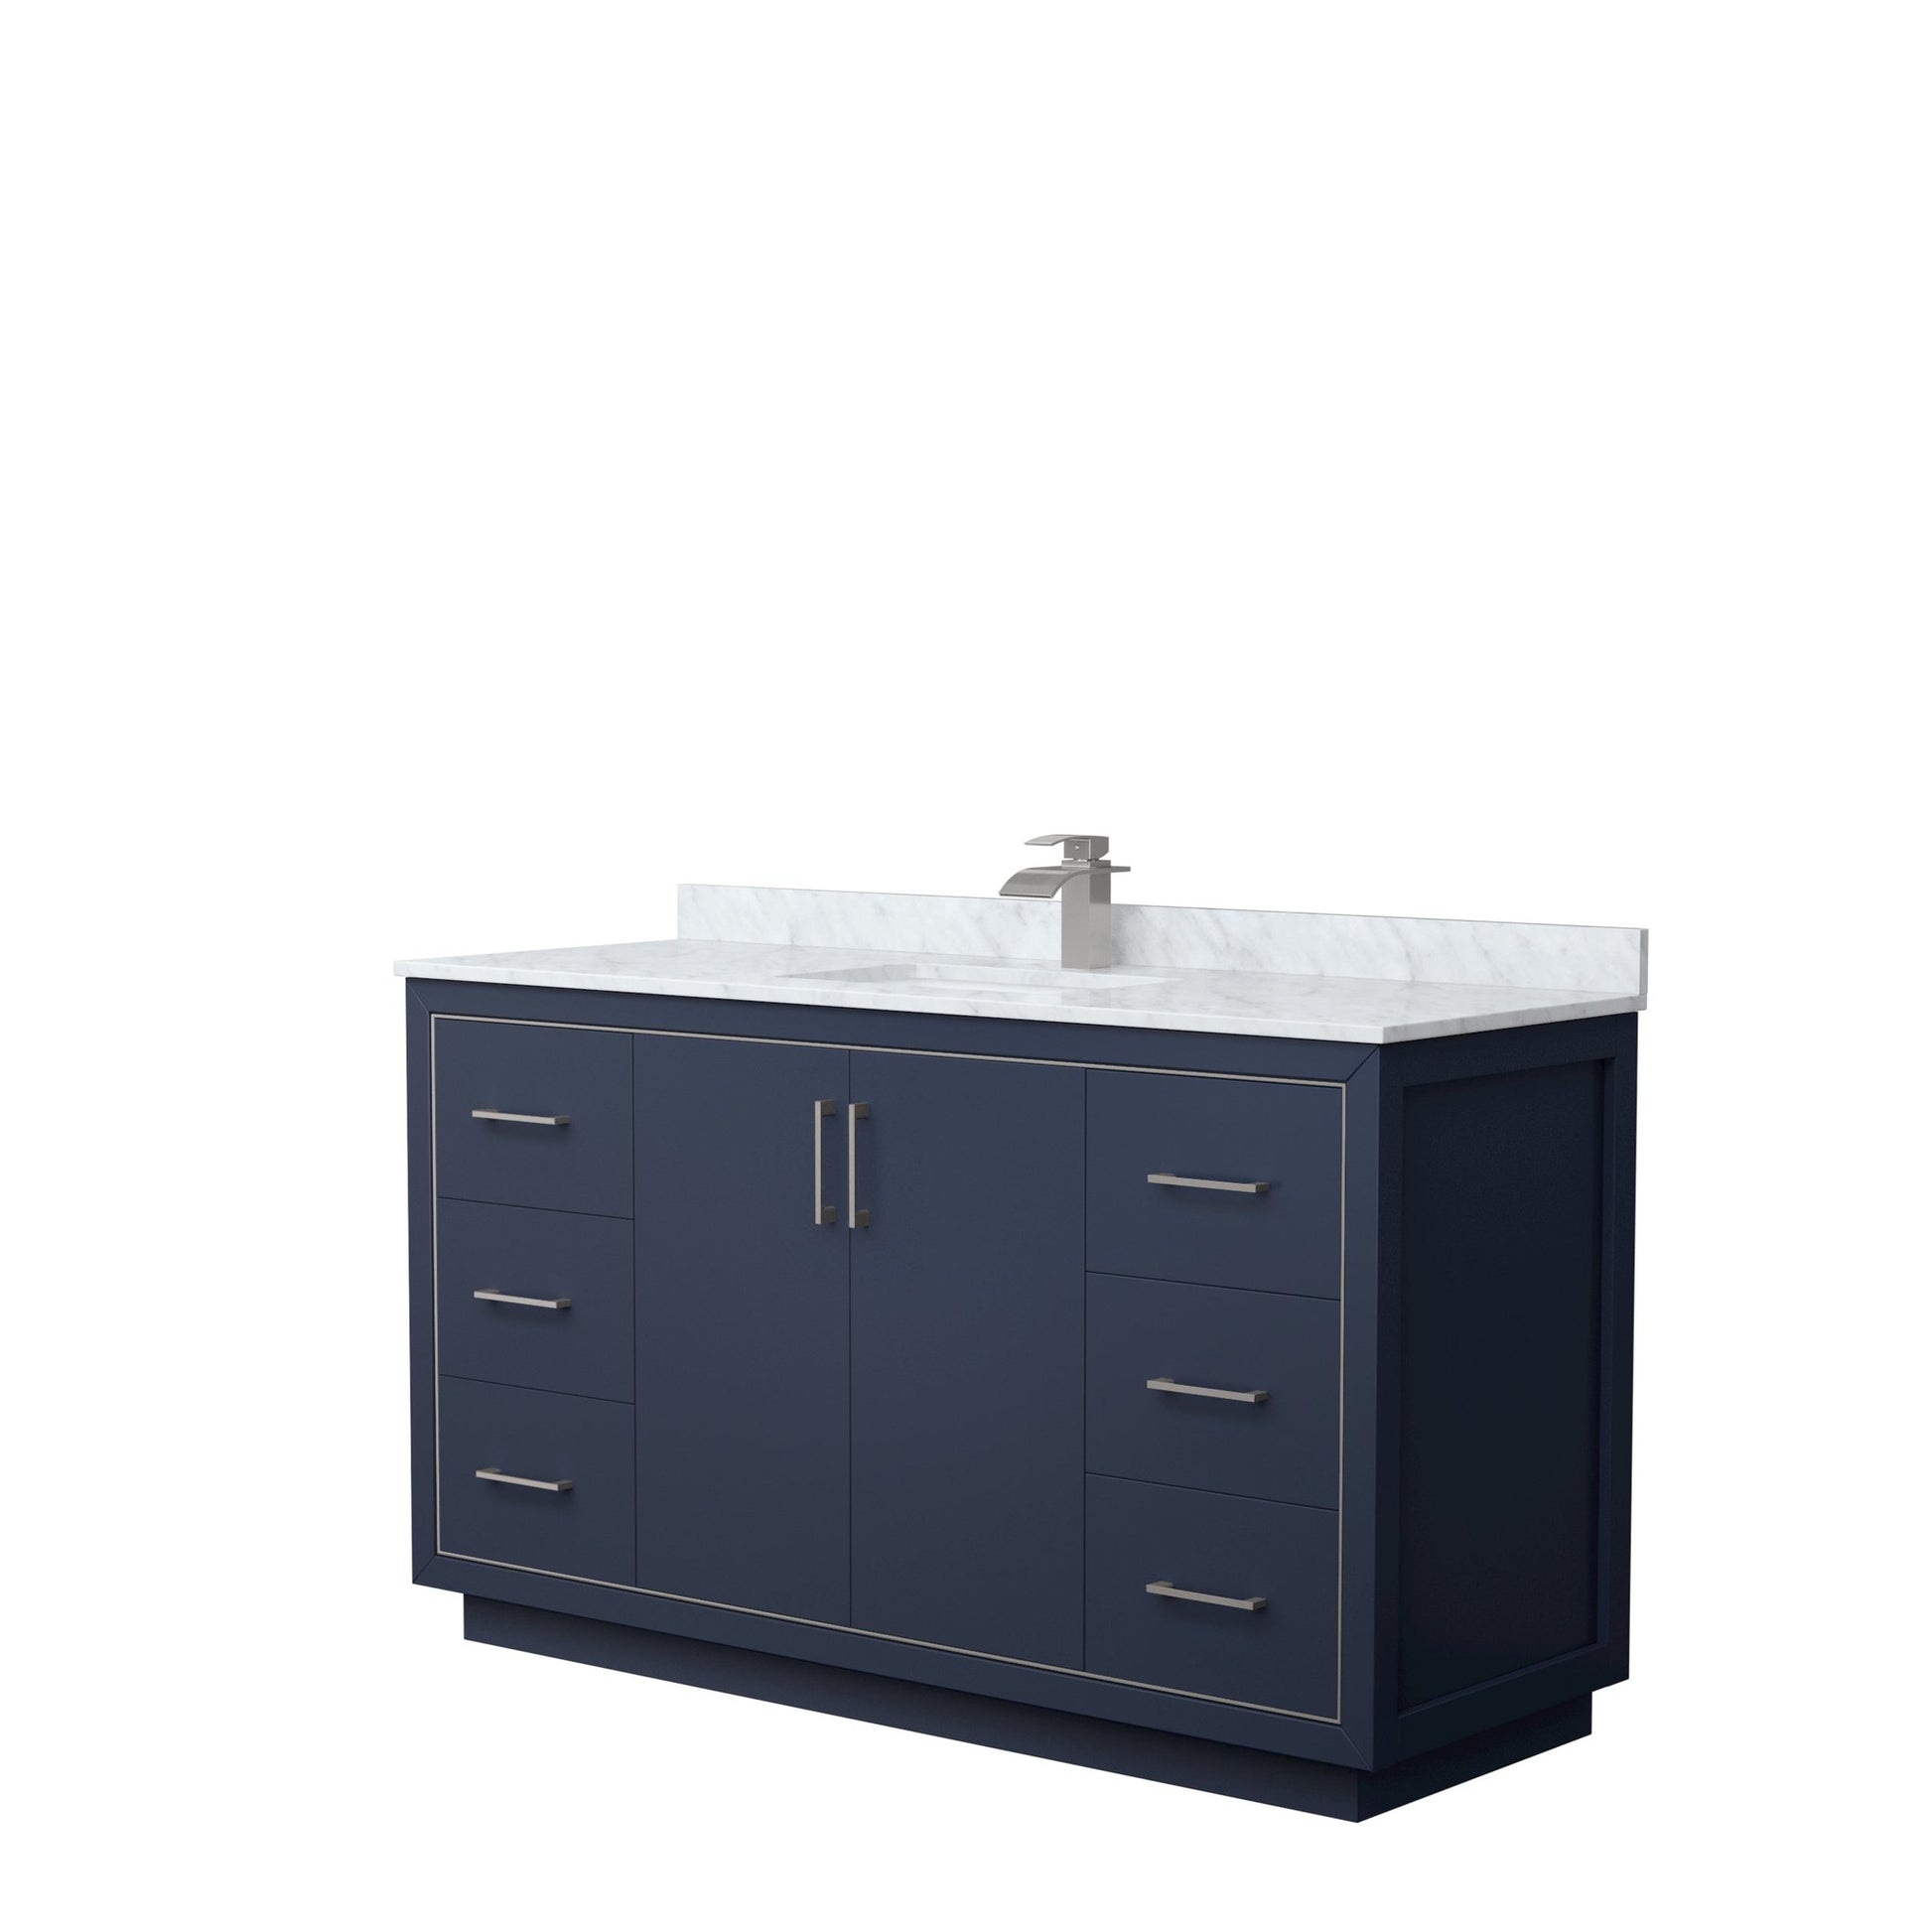 Wyndham Collection Icon 60" Single Bathroom Vanity in Dark Blue, White Carrara Marble Countertop, Undermount Square Sink, Brushed Nickel Trim